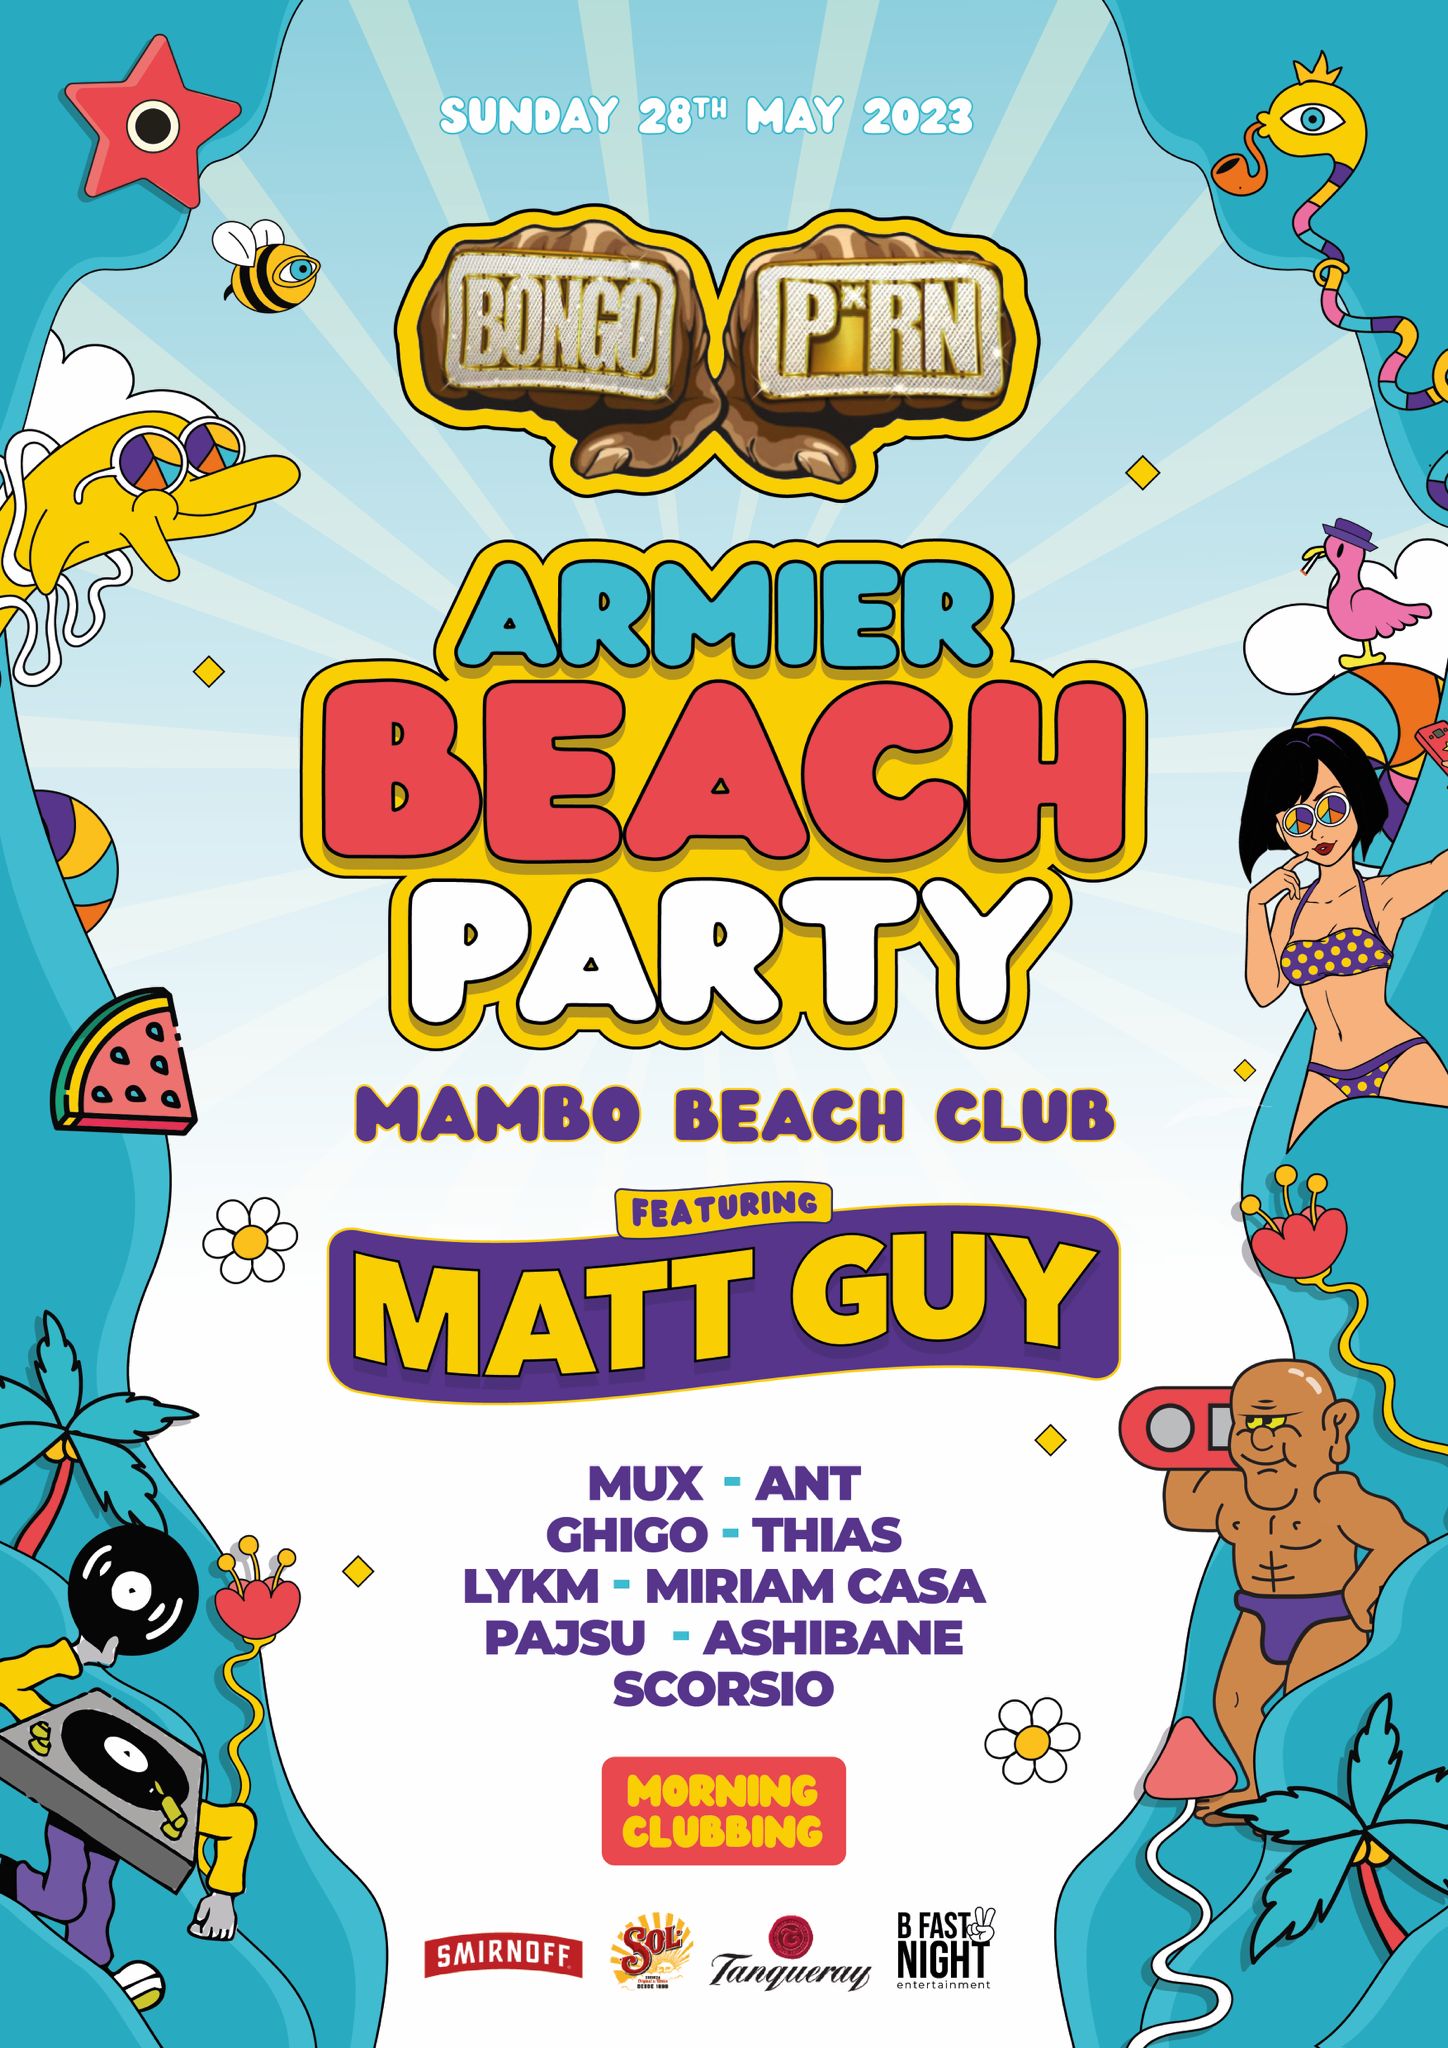 BONGO PORN ARMIER BEACH PARTY ft. MATT GUY poster